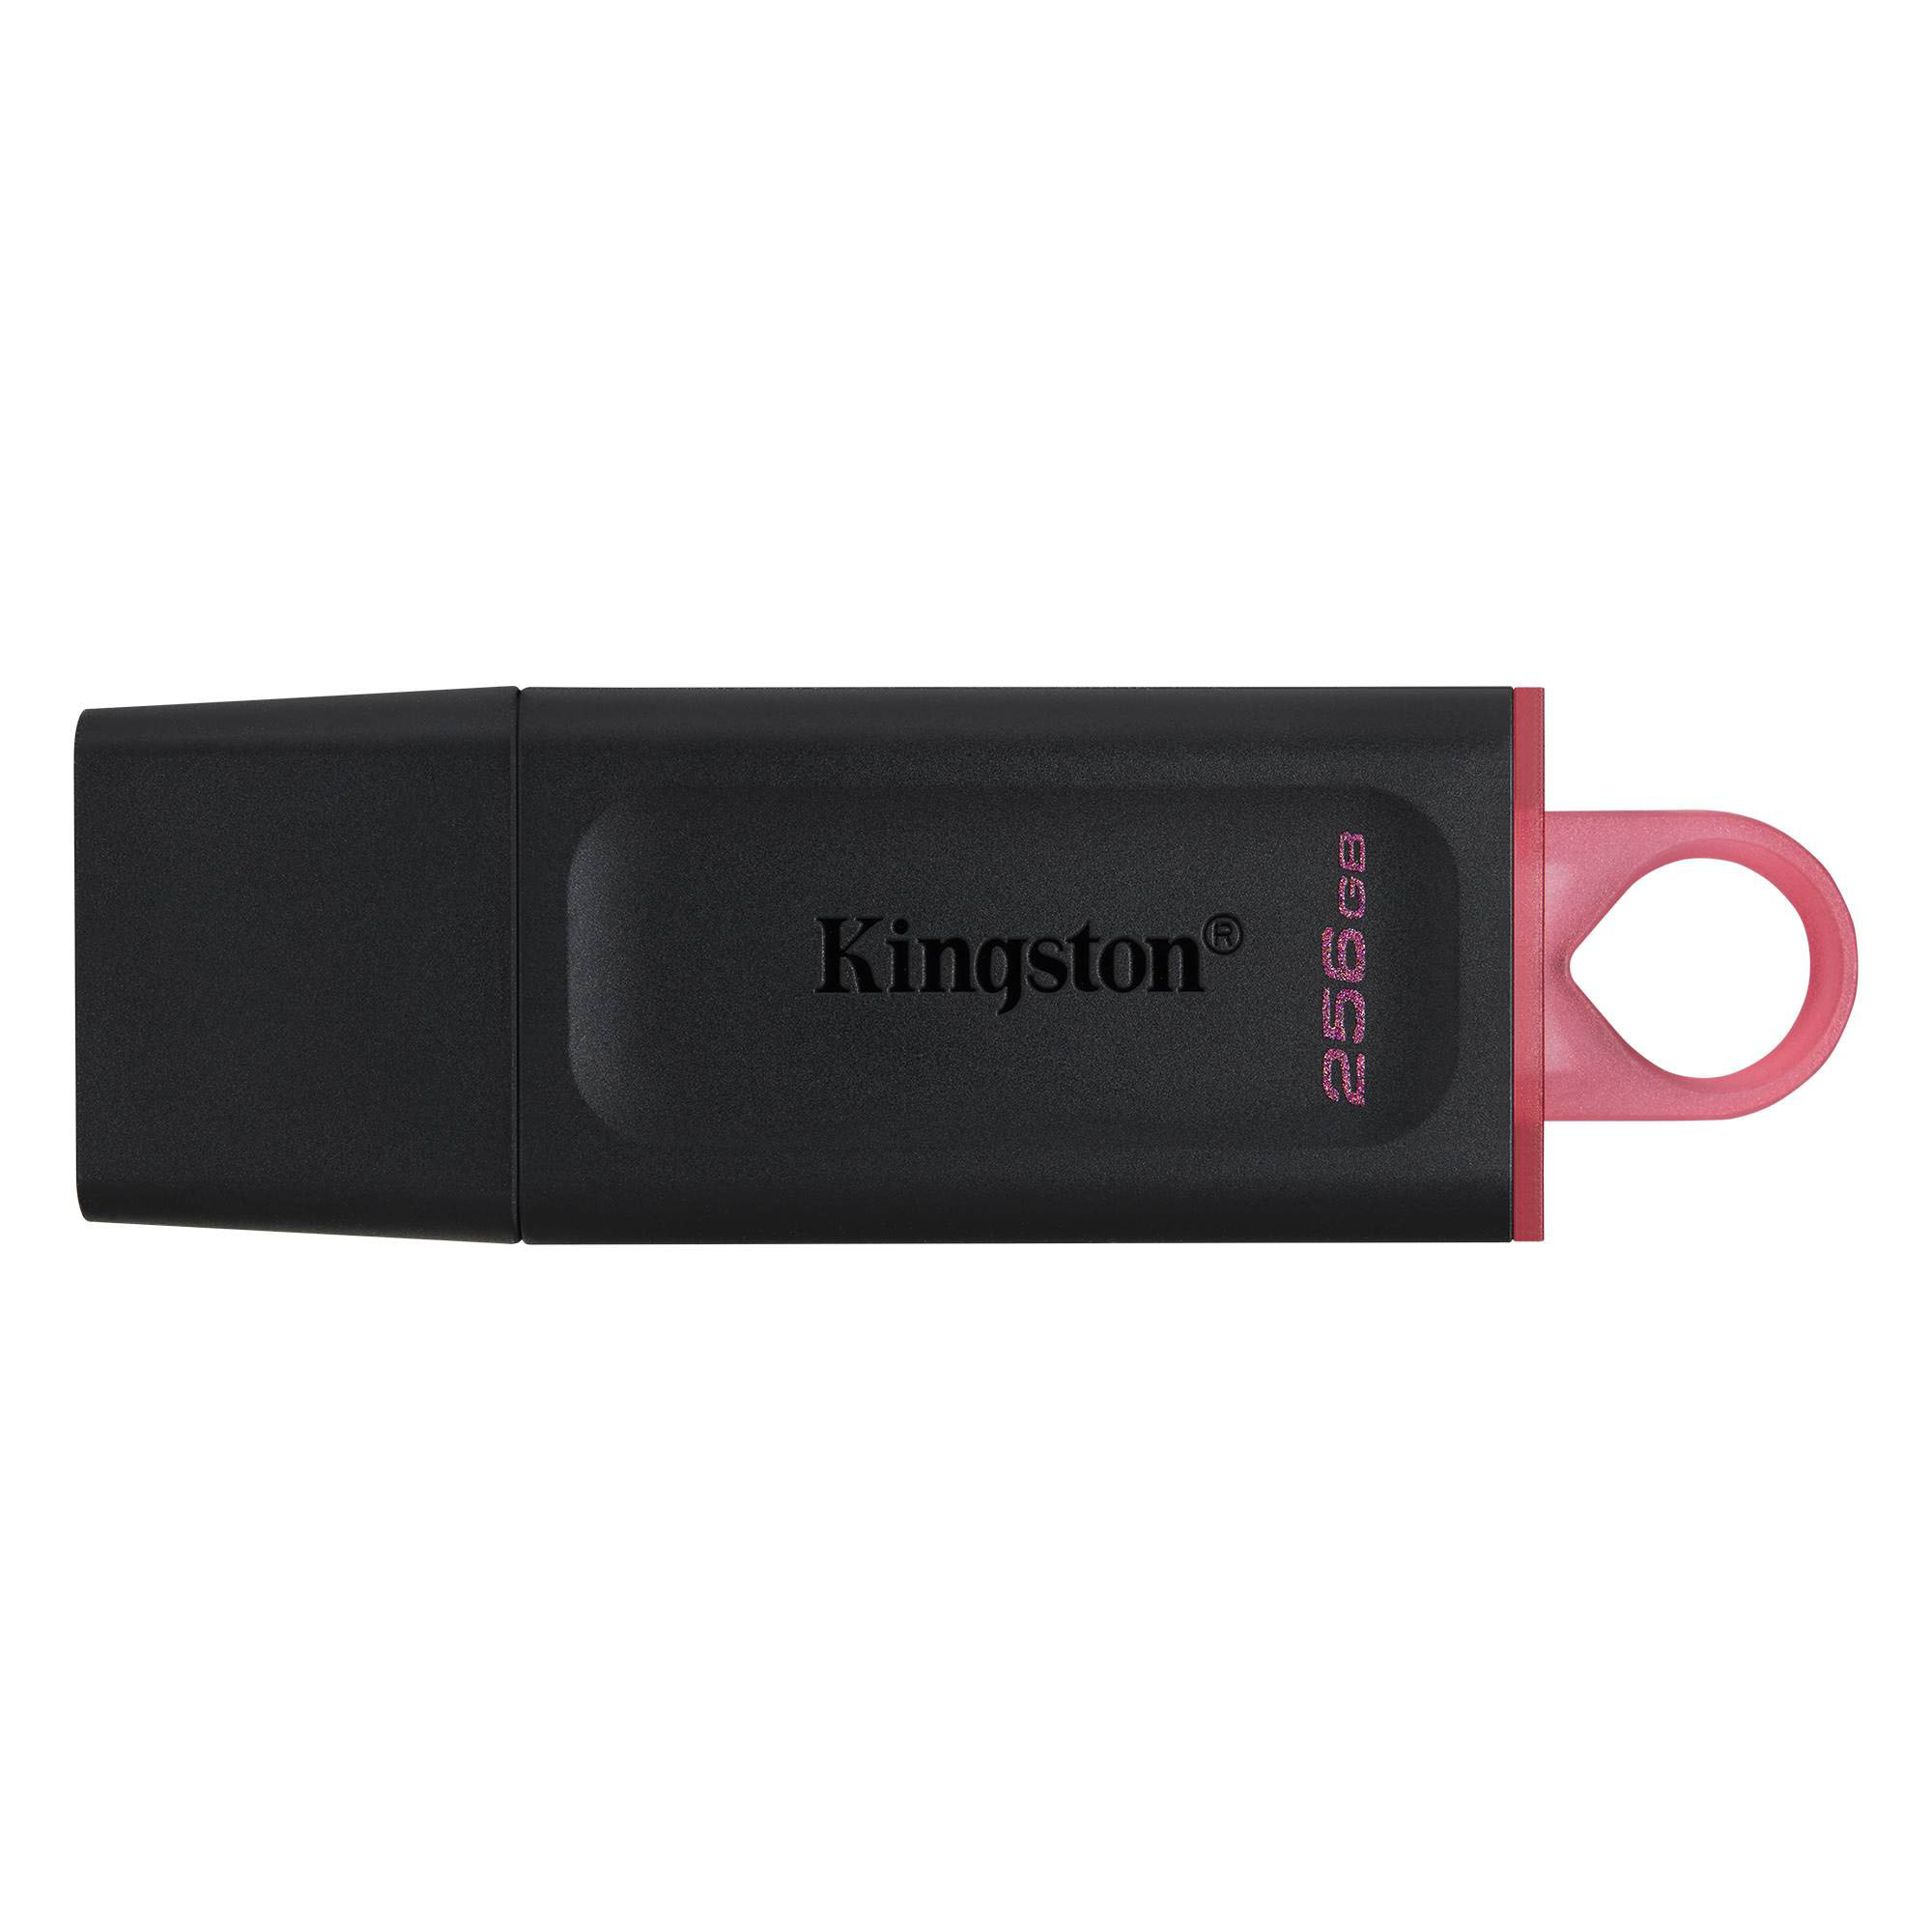 USB Memory Stick Kingston UFD 256GB DTX